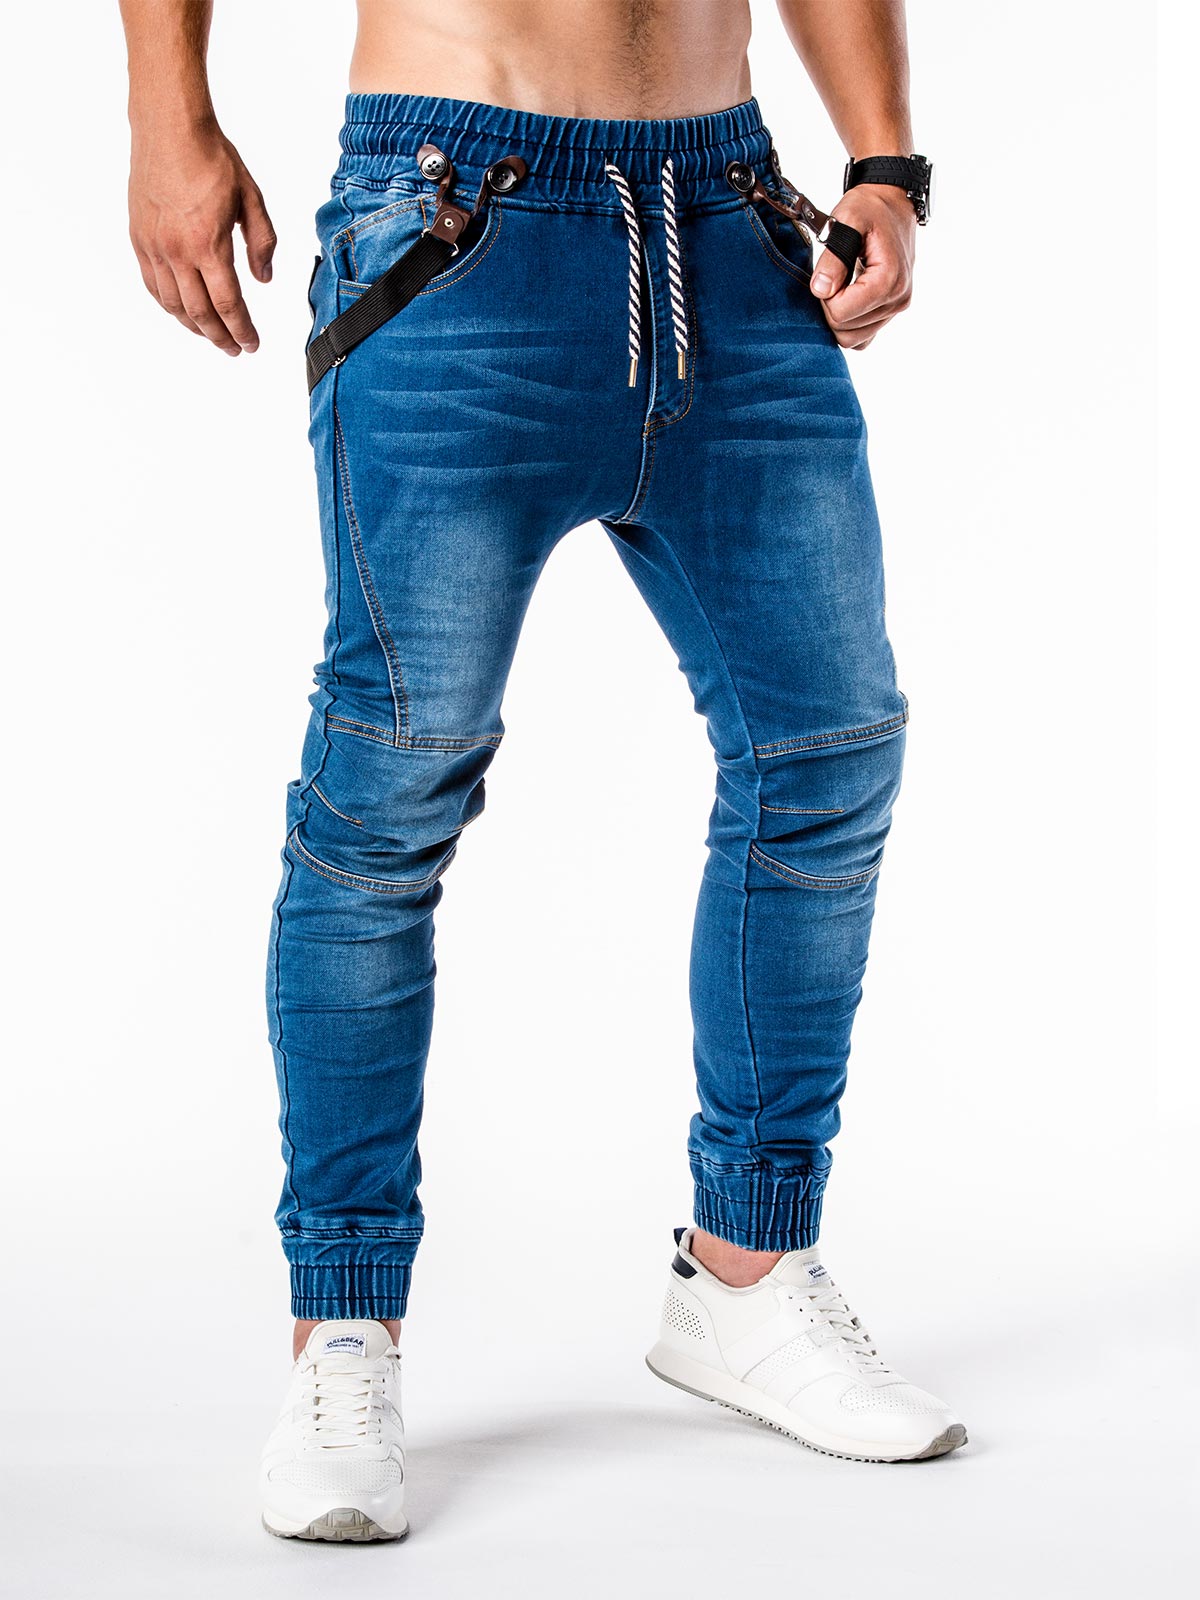 Накаченные джинсы. Мужские джинсы джоггеры Коллинз. Джинсы джогеры 2y DNM by Adres Group. Красивые джинсы мужские. Джинсовые брюки мужские.